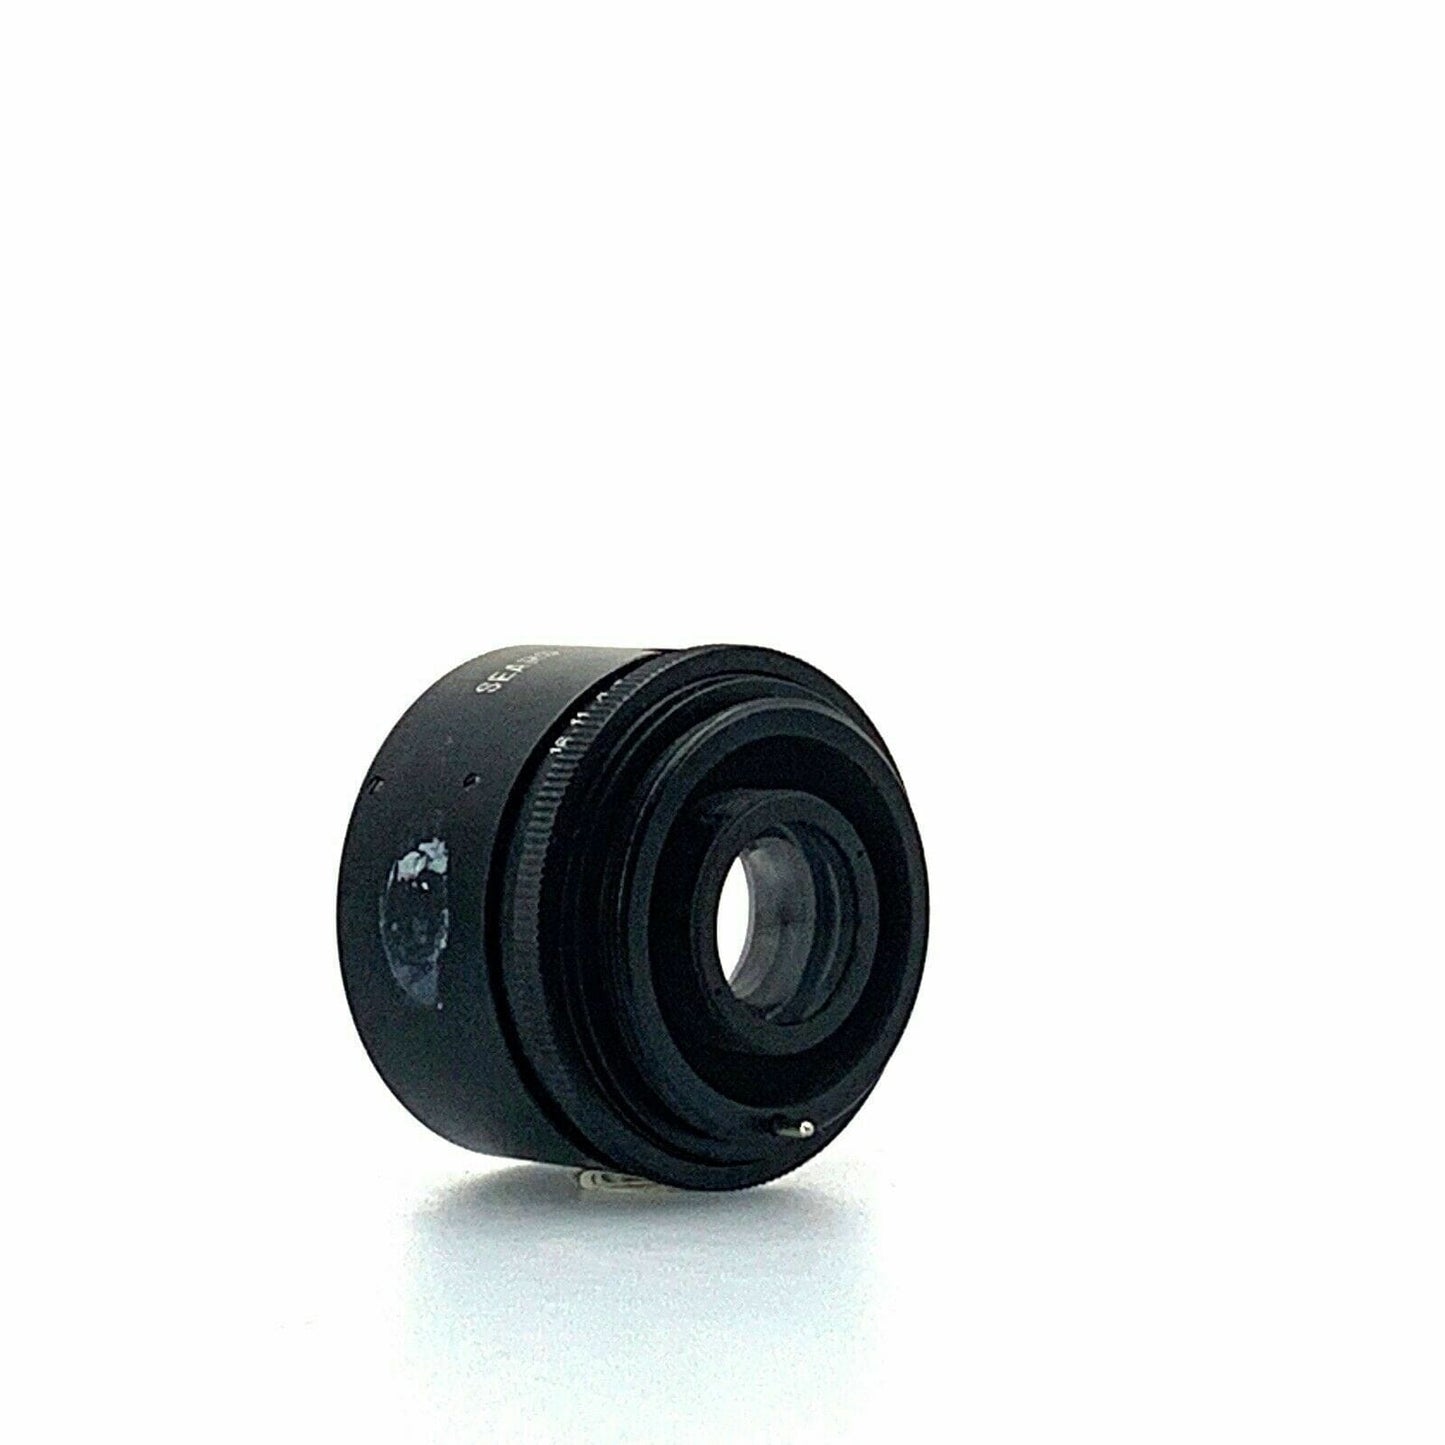 3X Auto Tele Converter for SEARS SLR Cameras 7343 w/Original Box - Made in Japan